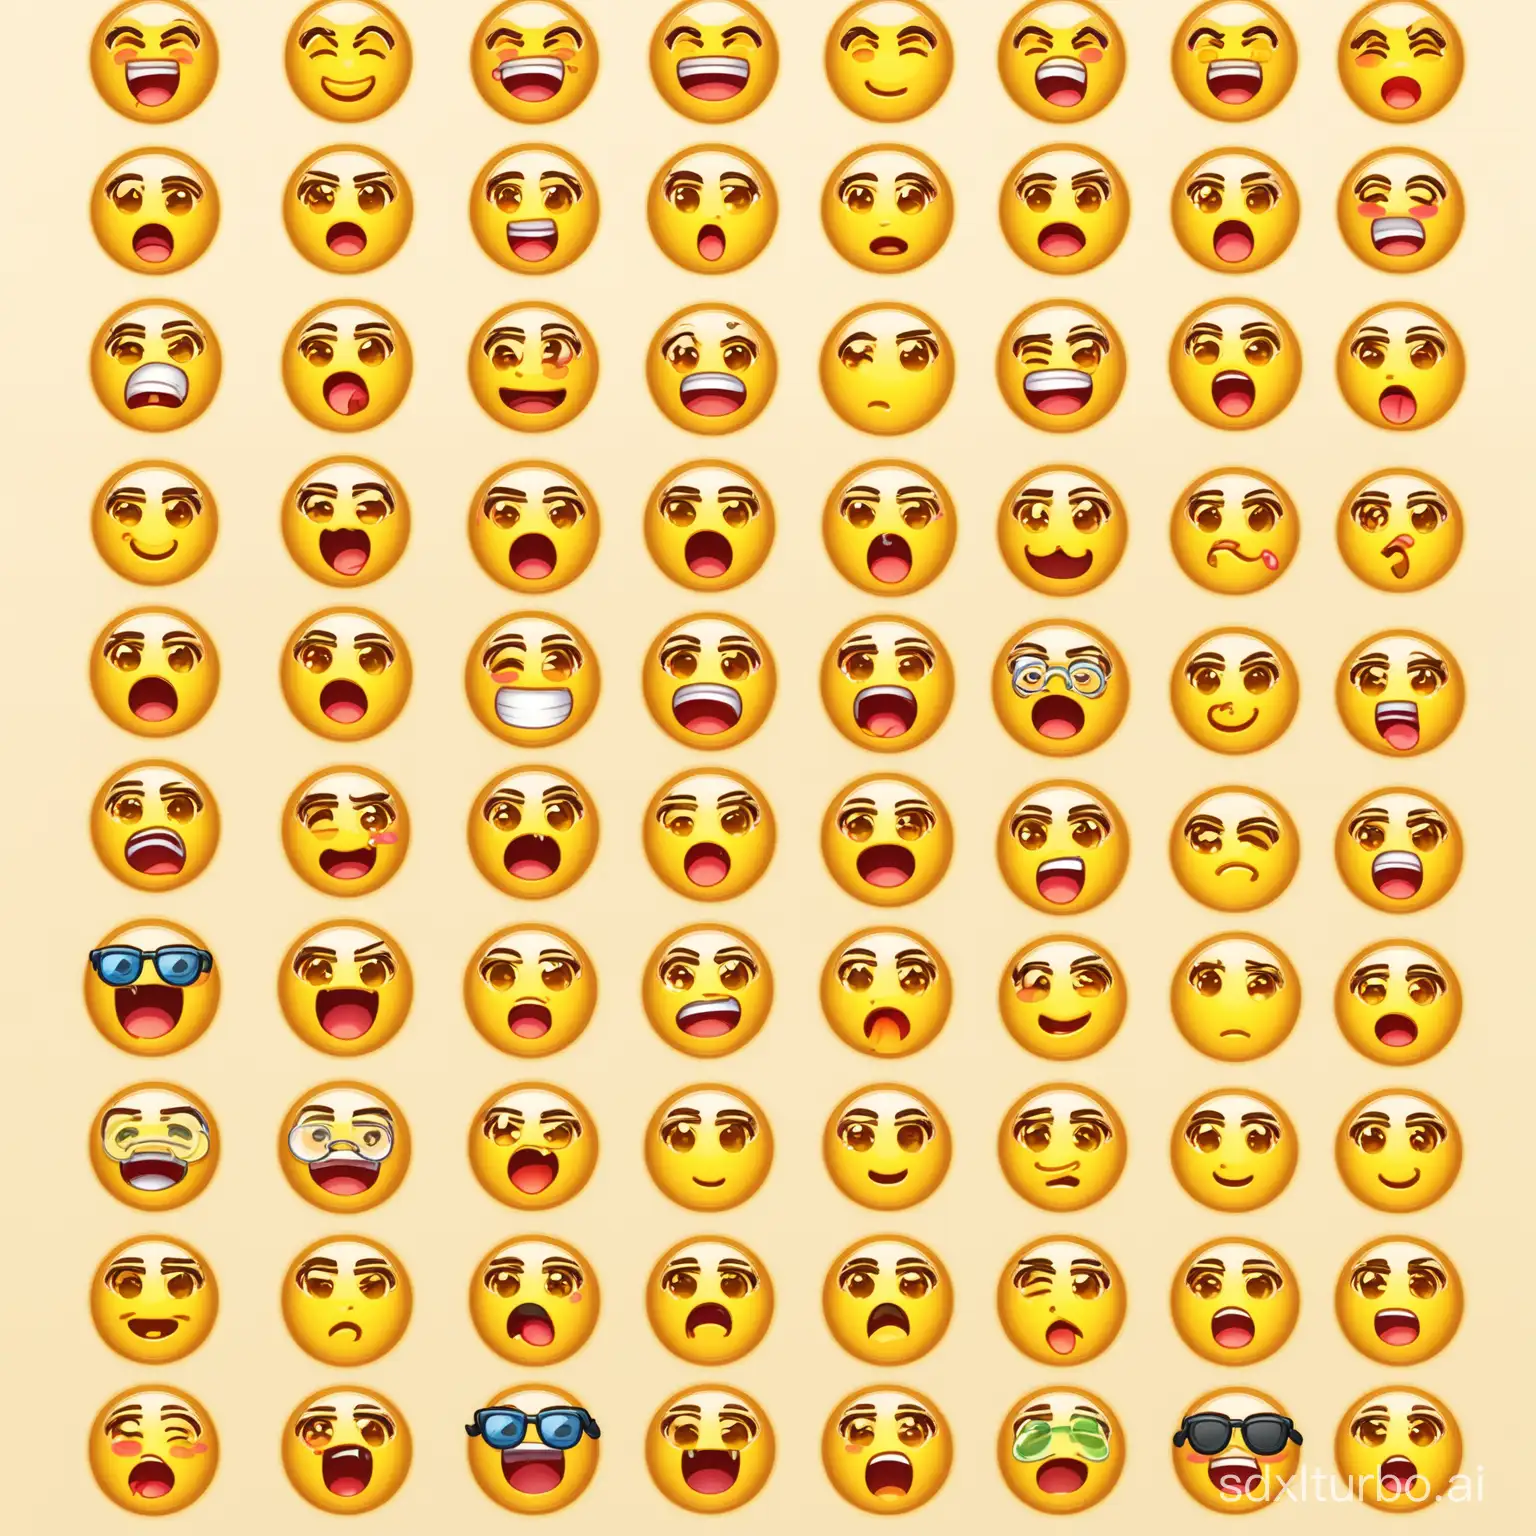 Diverse-Emoji-Set-Expressive-Faces-for-Every-Mood